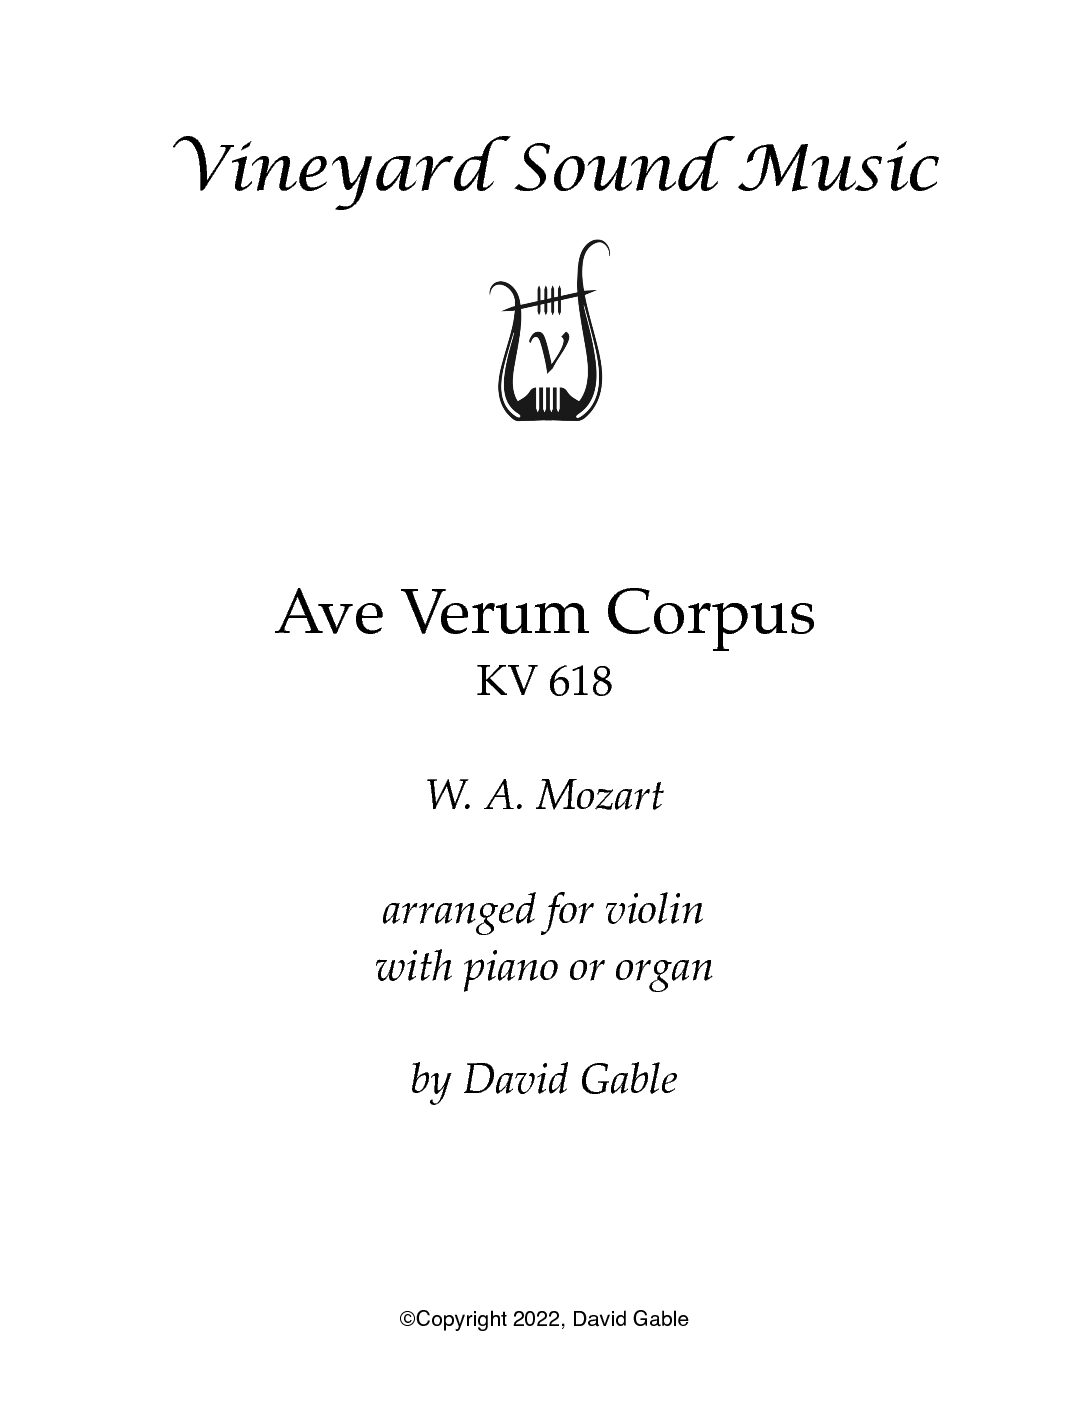 Ave Verum Corpus, KV 618 (violin and piano or organ) – Vineyard Sound Music